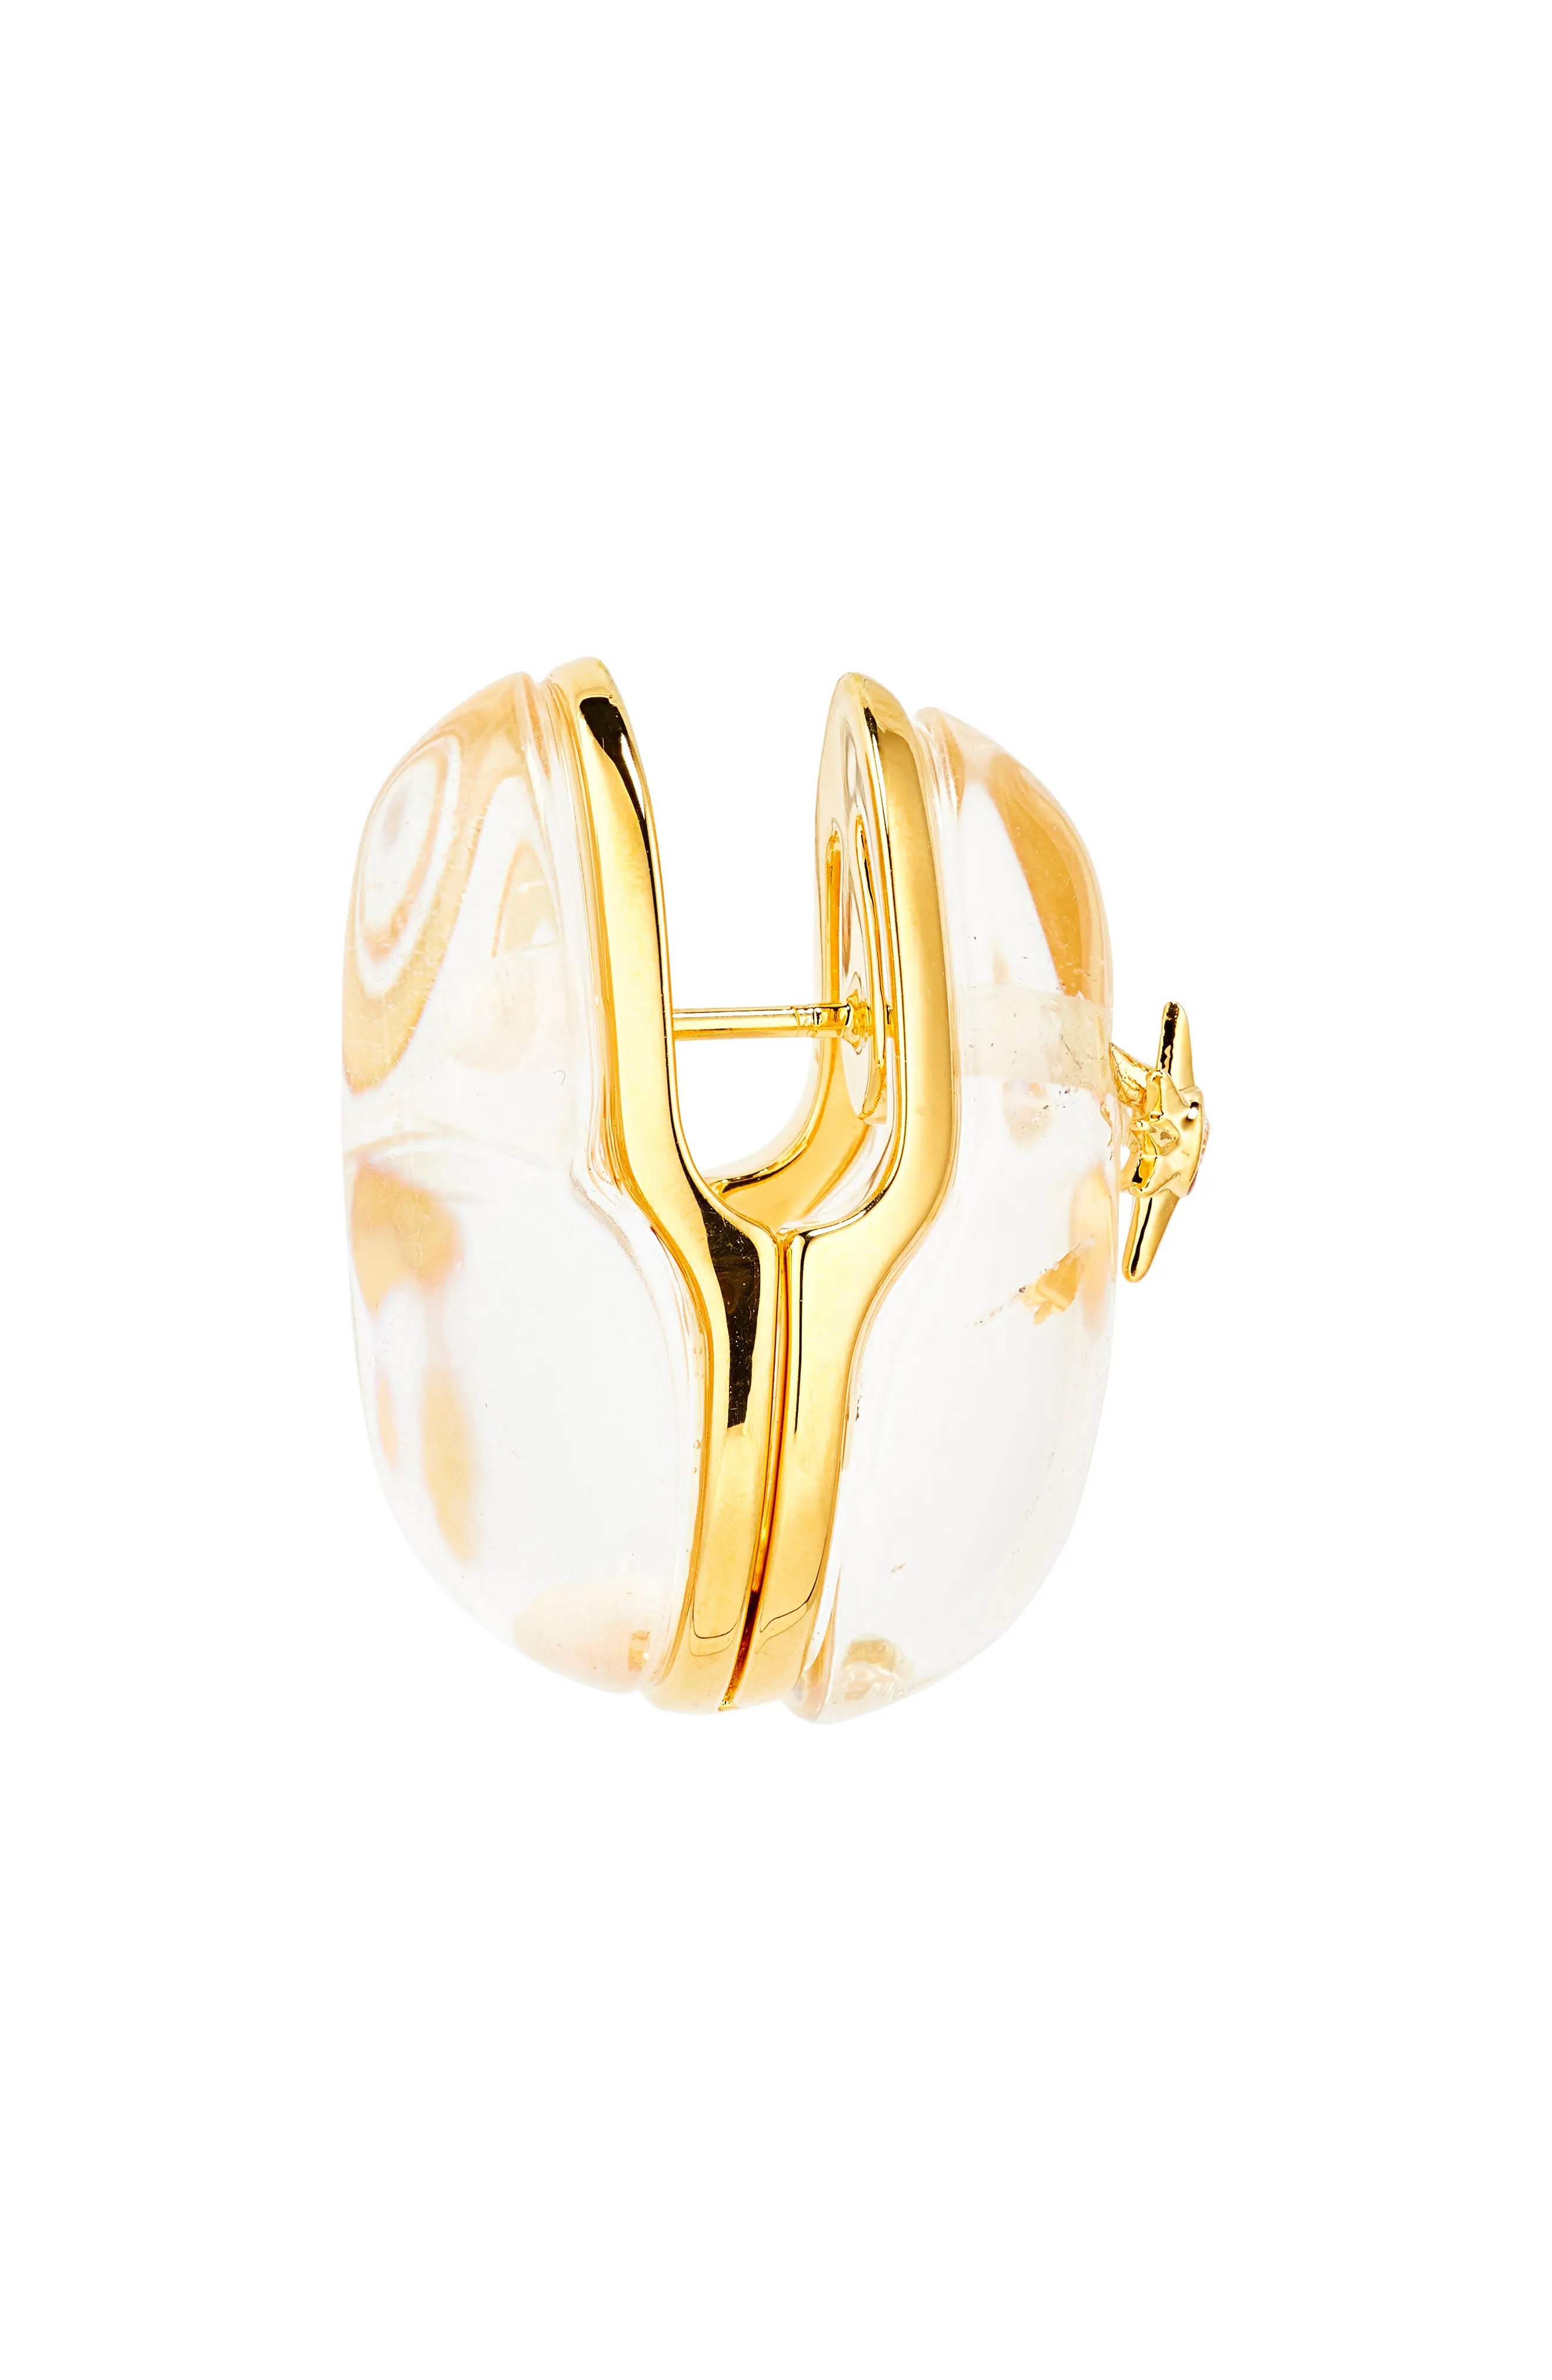 Crystal Pebble Earrings in Gold/Transparent Quartz - 4